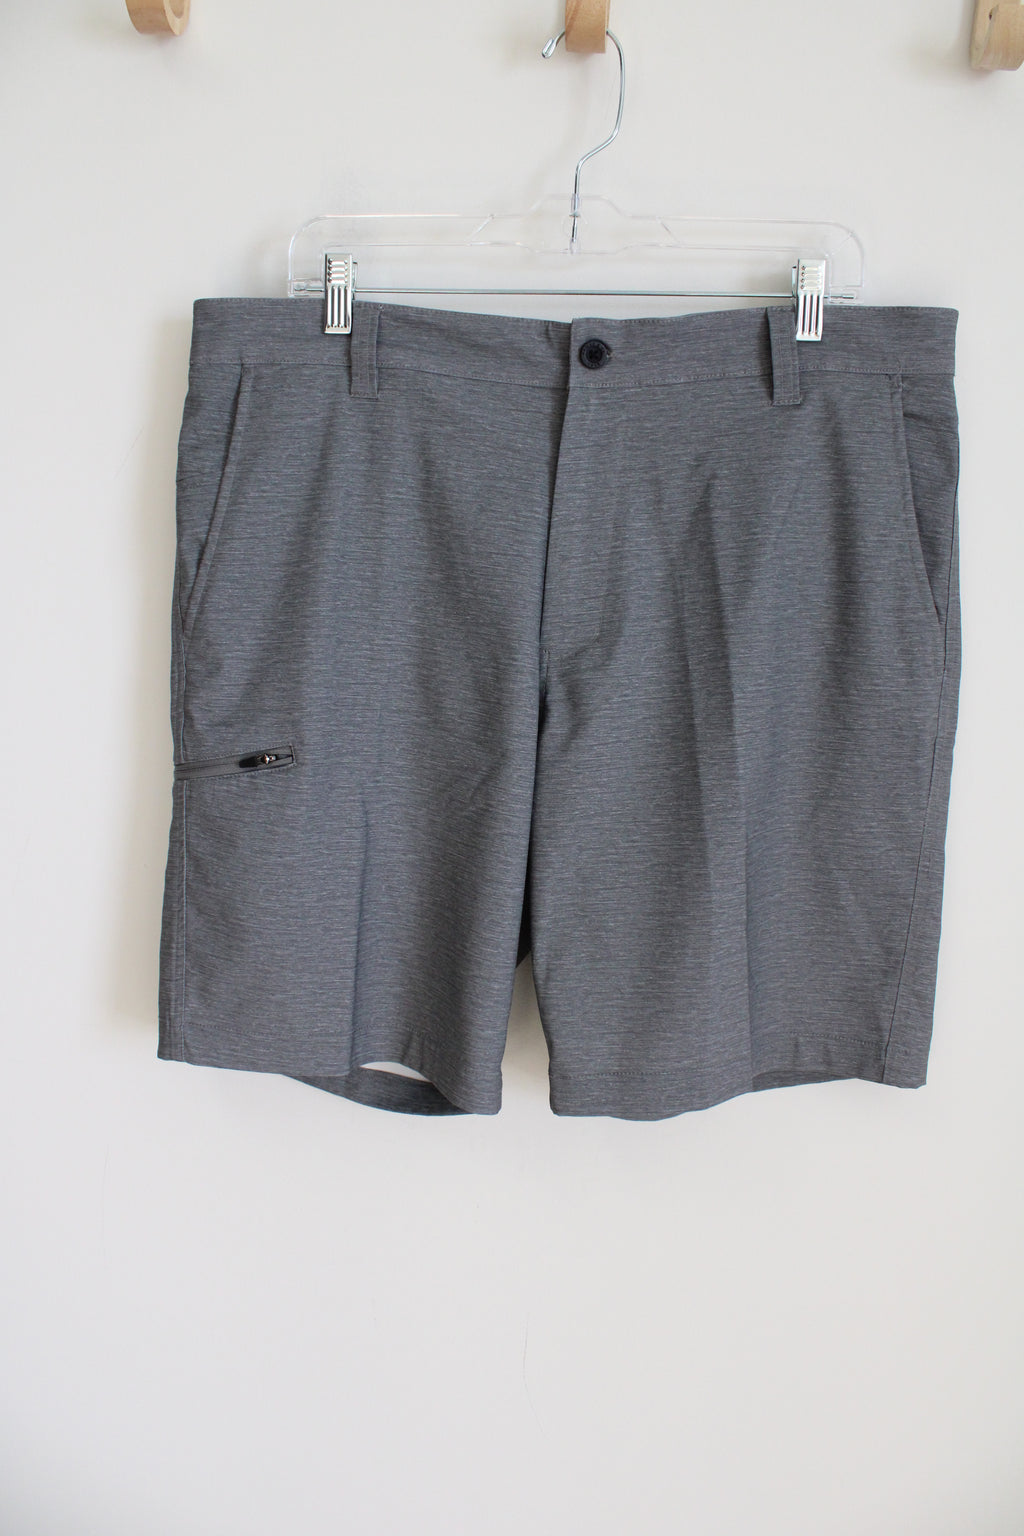 Hawke & Co. Gray Shorts | 36